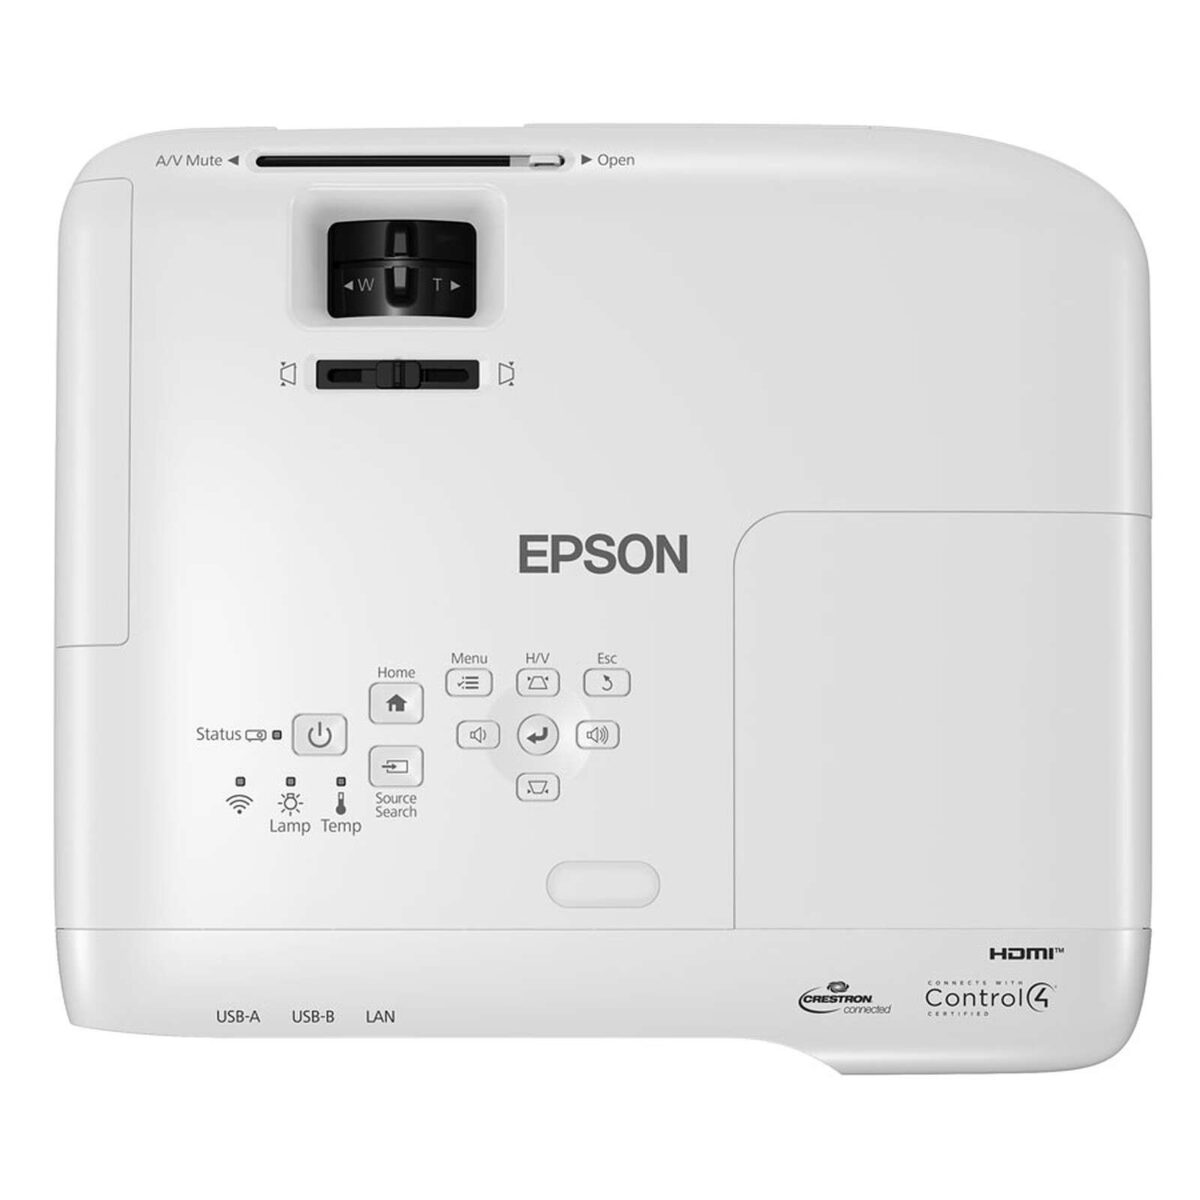 Epson EB-992F Vidéoprojecteur Full HD (1920 x 1080) (V11H988040)